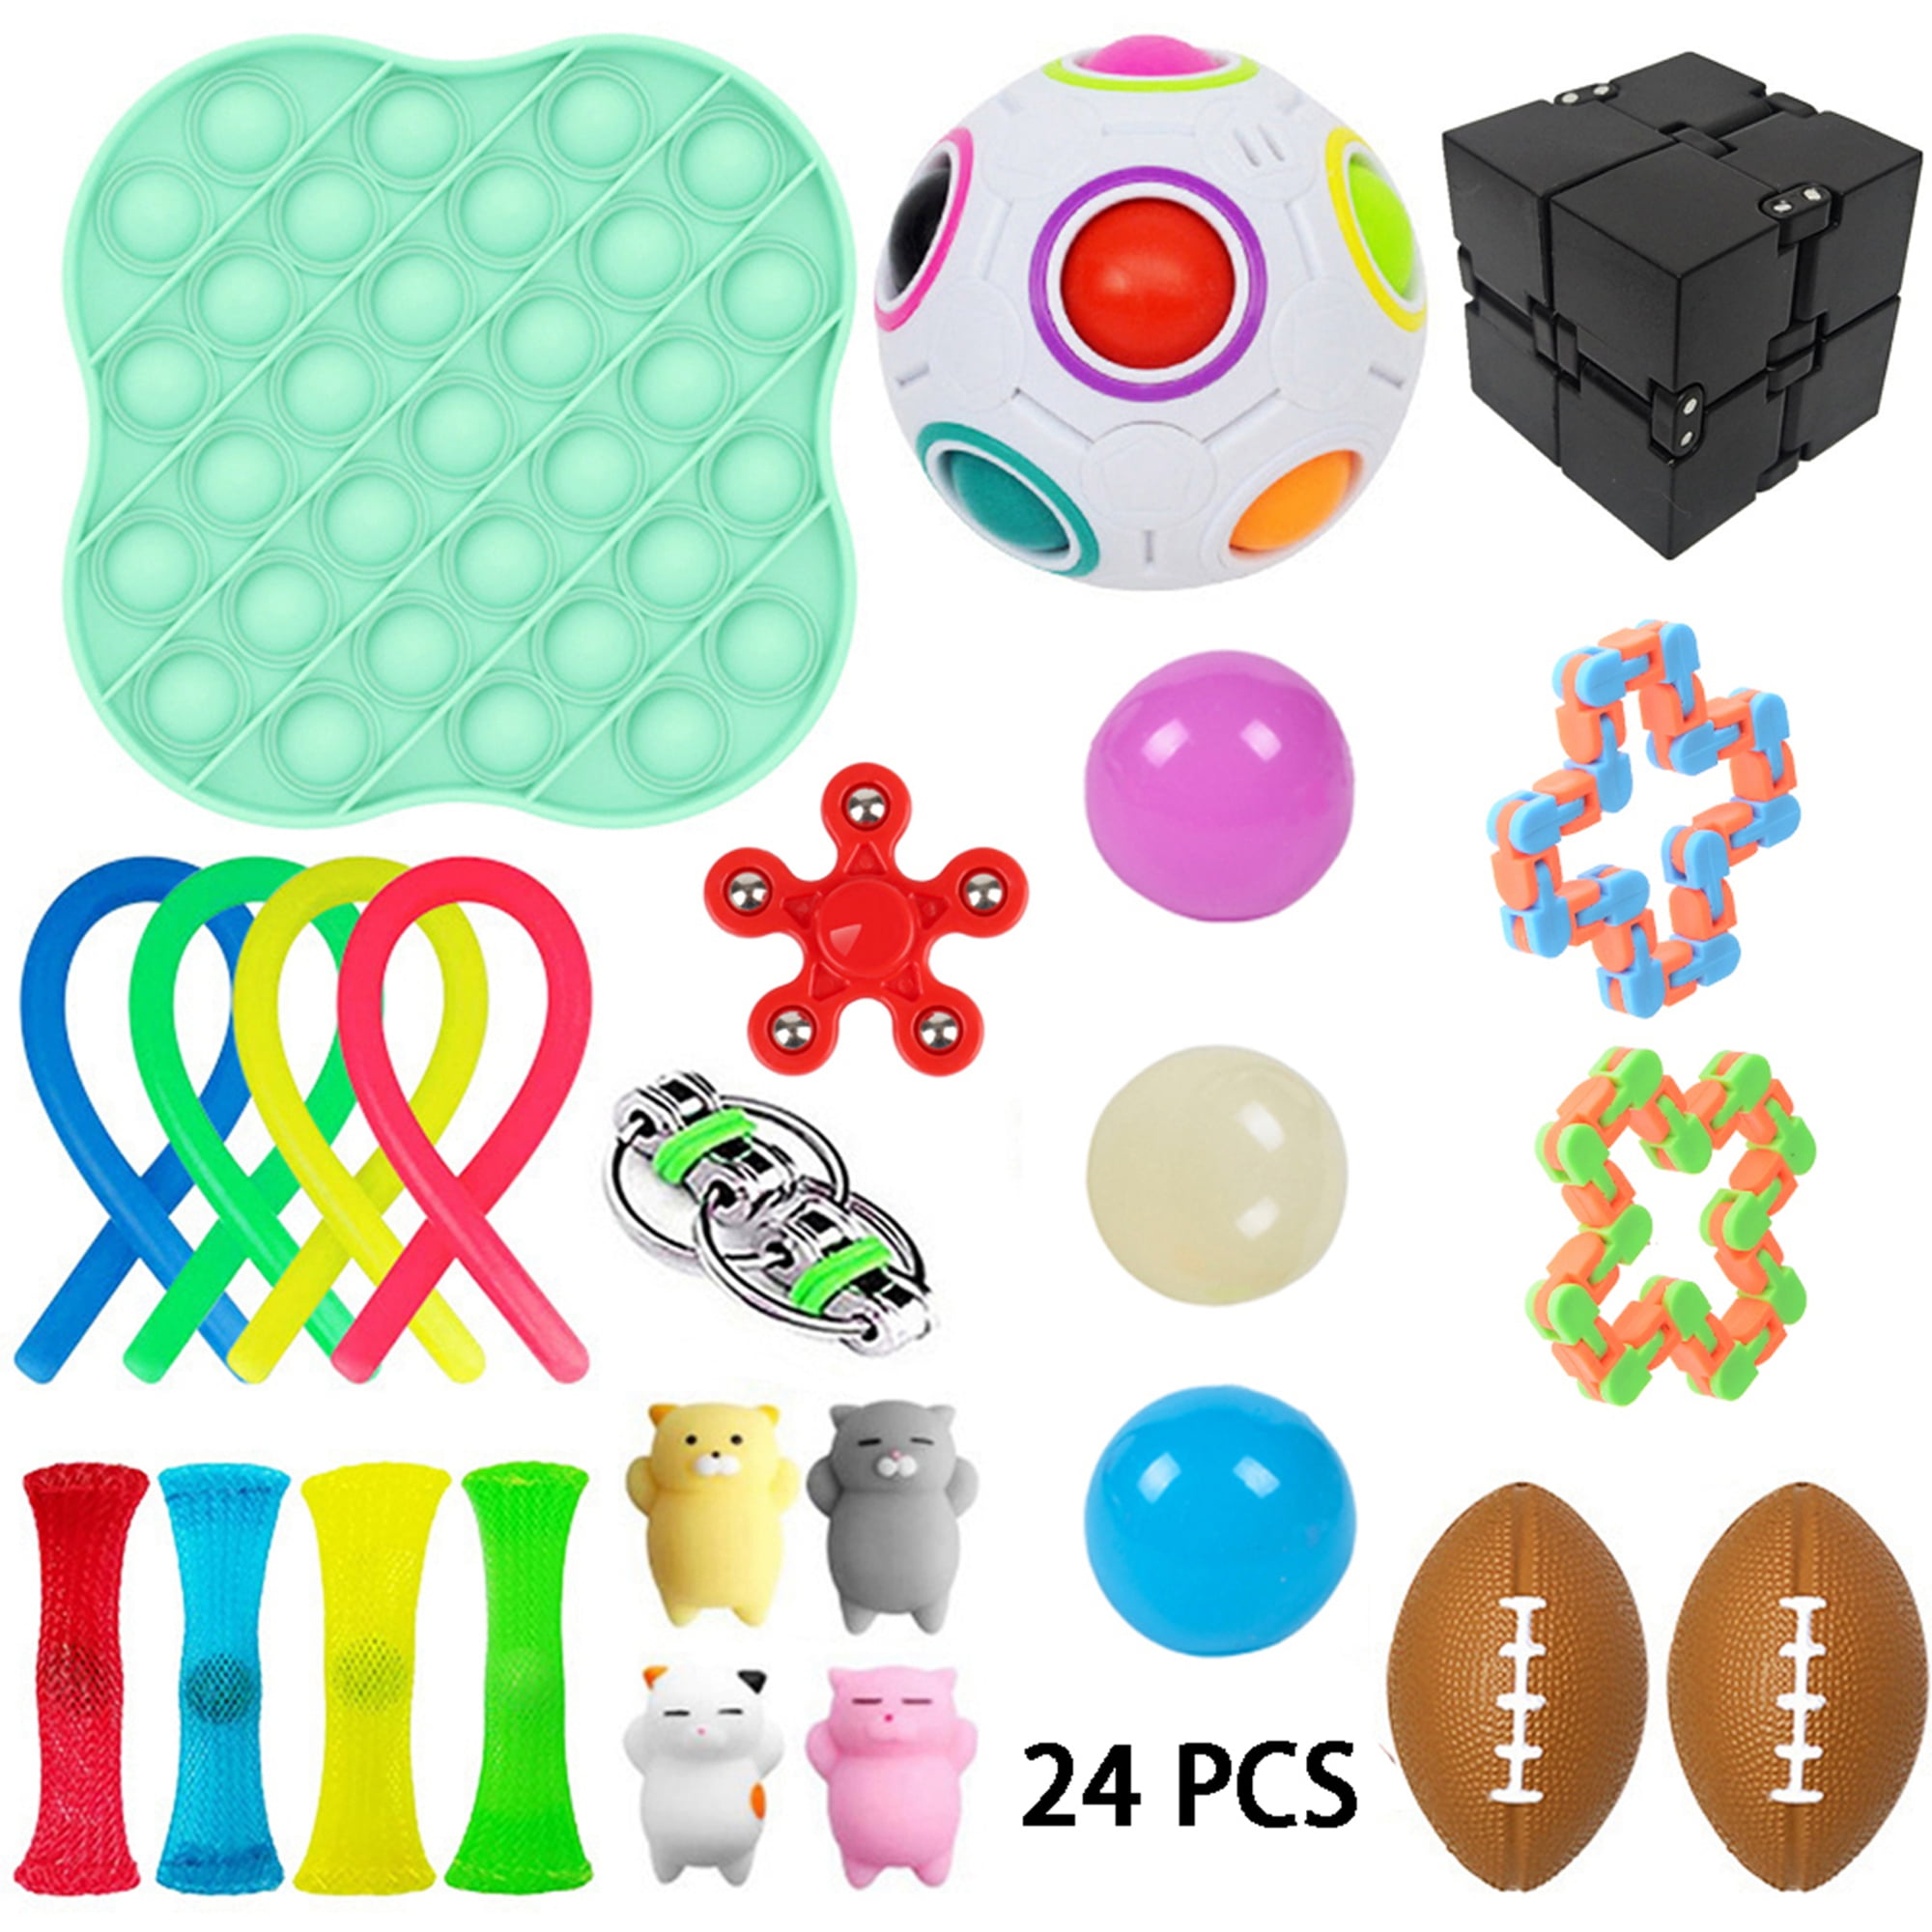 Details about   Fidget Toys Set Kit Sensory Relief Hand Tools Kids Adults Bundle Stress ADHD Toy 